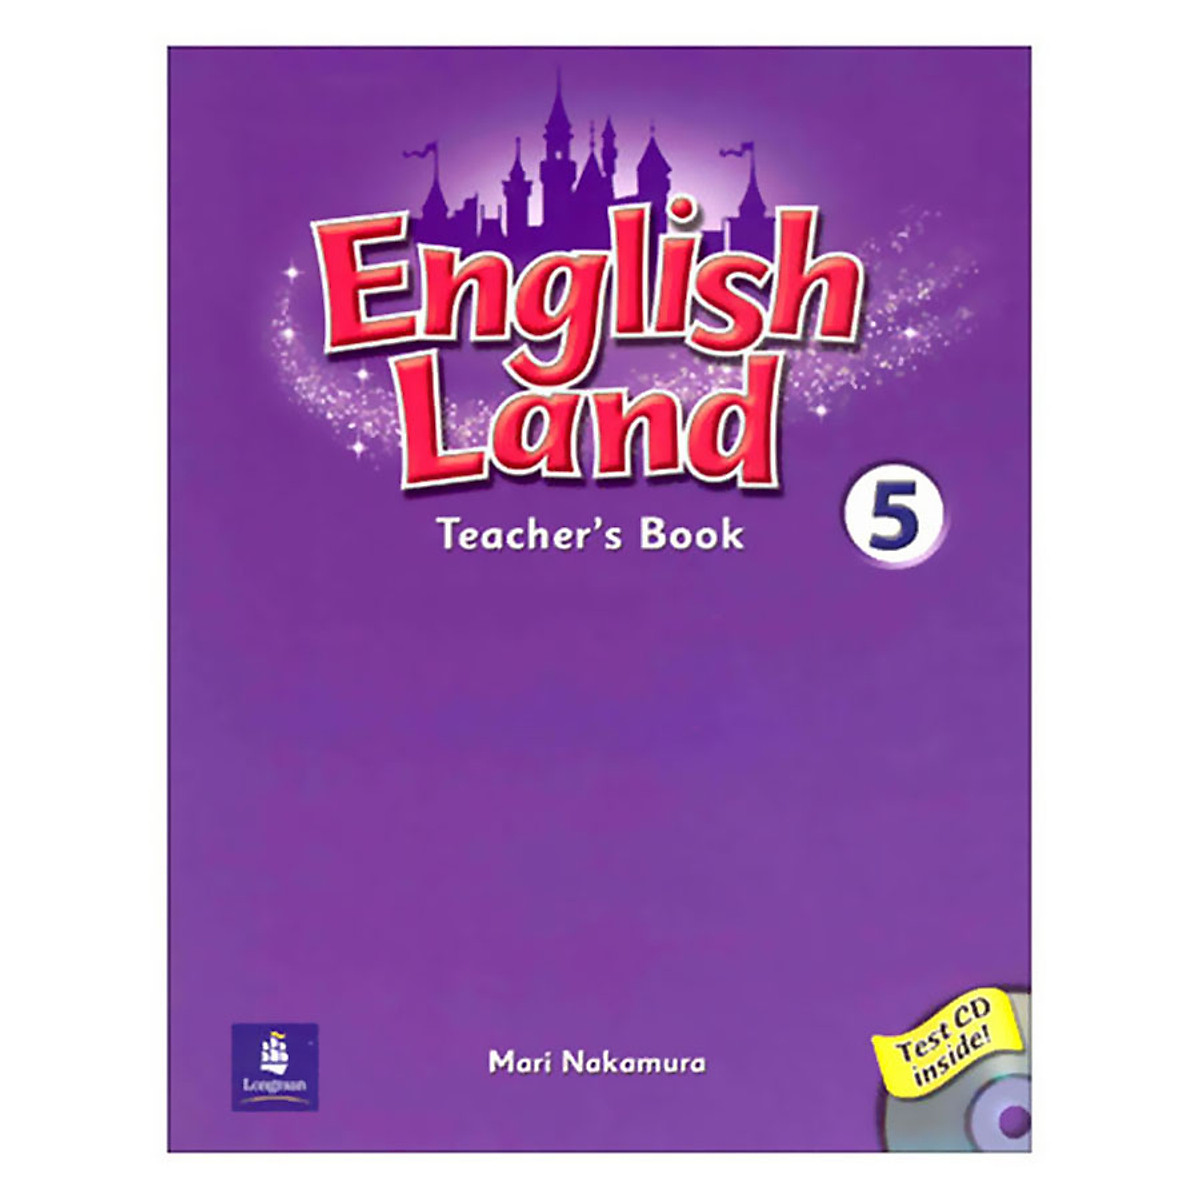 English Land 5: Teacher's Book